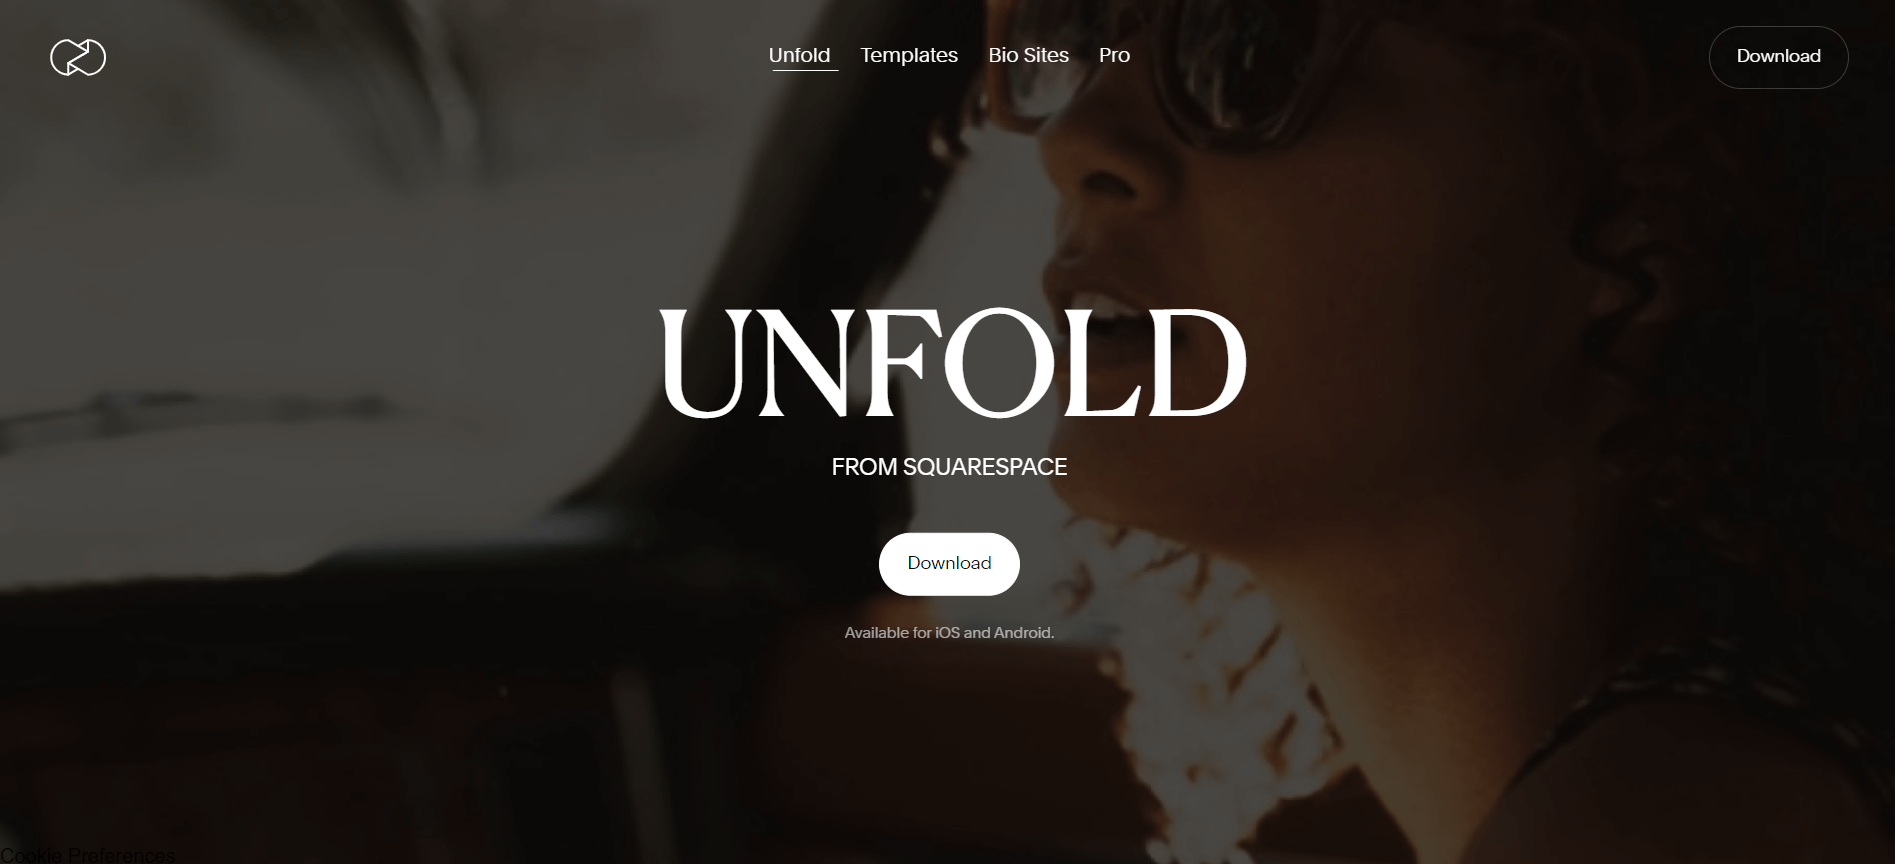 Unfold's minimalistic homepage